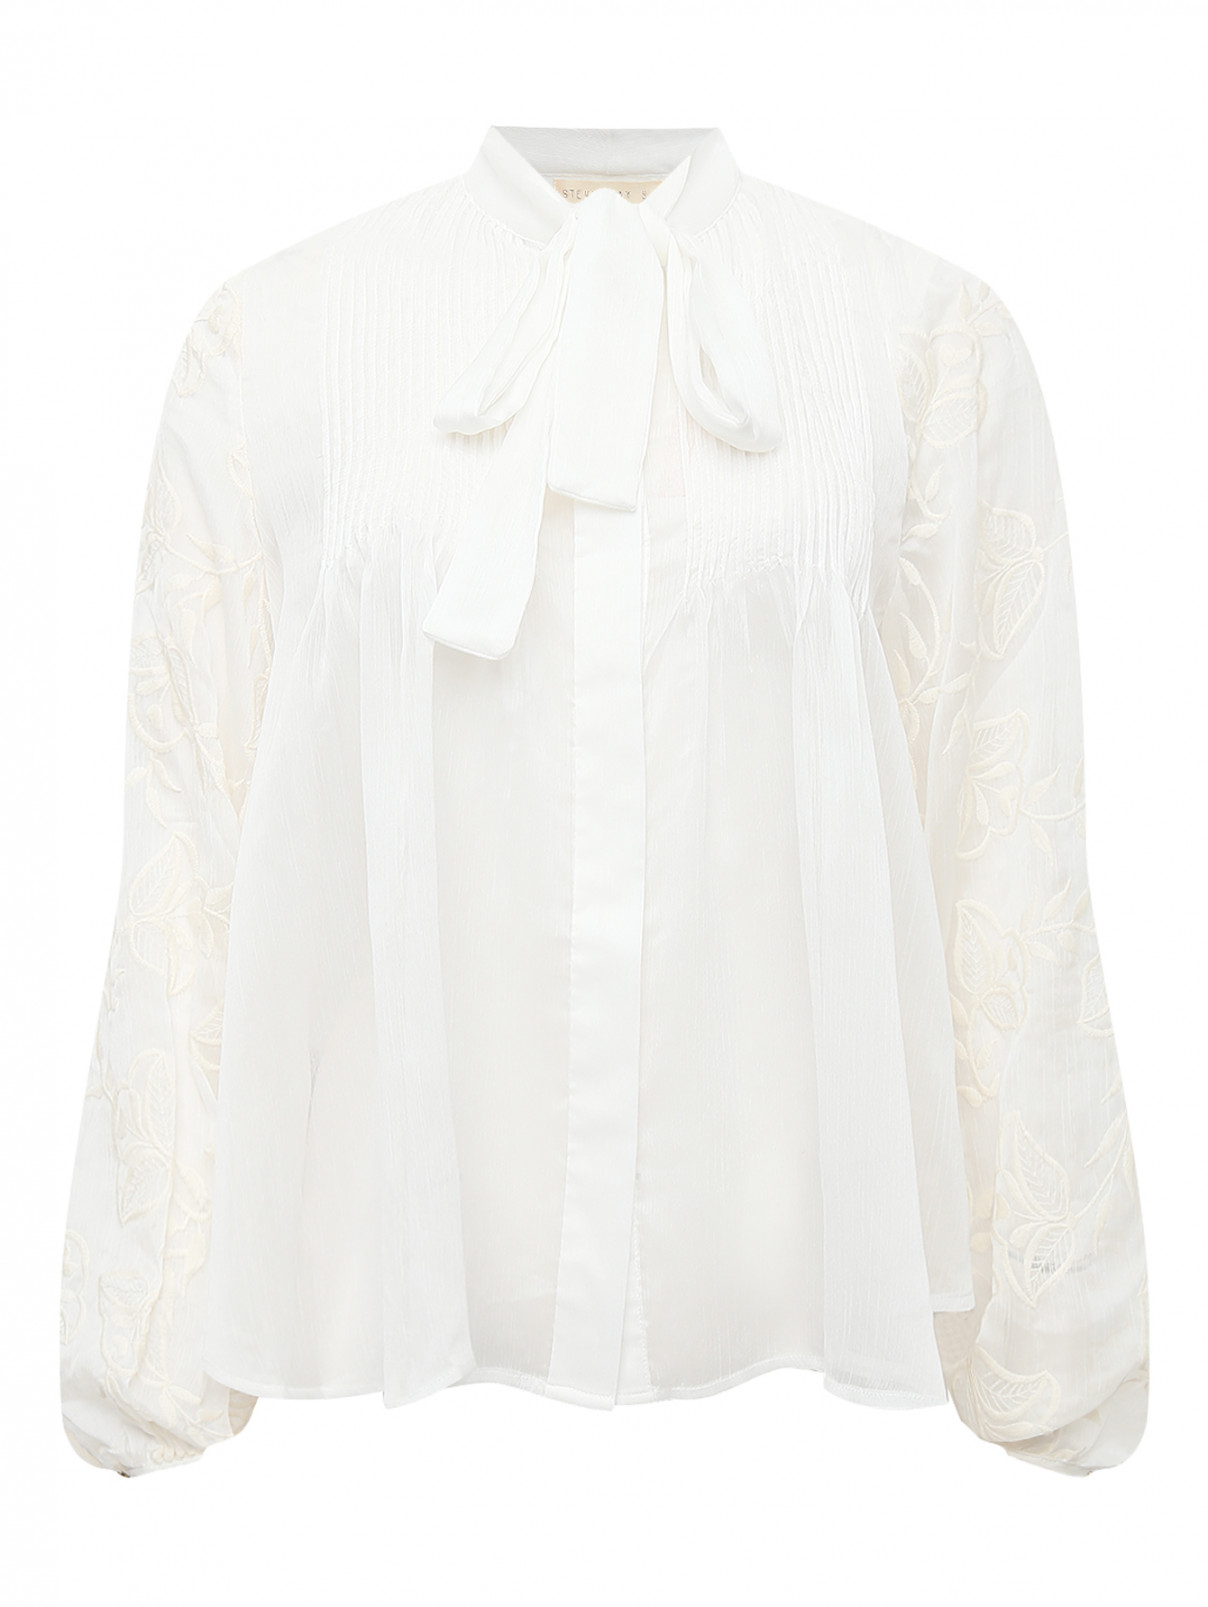 Блуза с узором Stevie May  –  Общий вид  – Цвет:  Белый